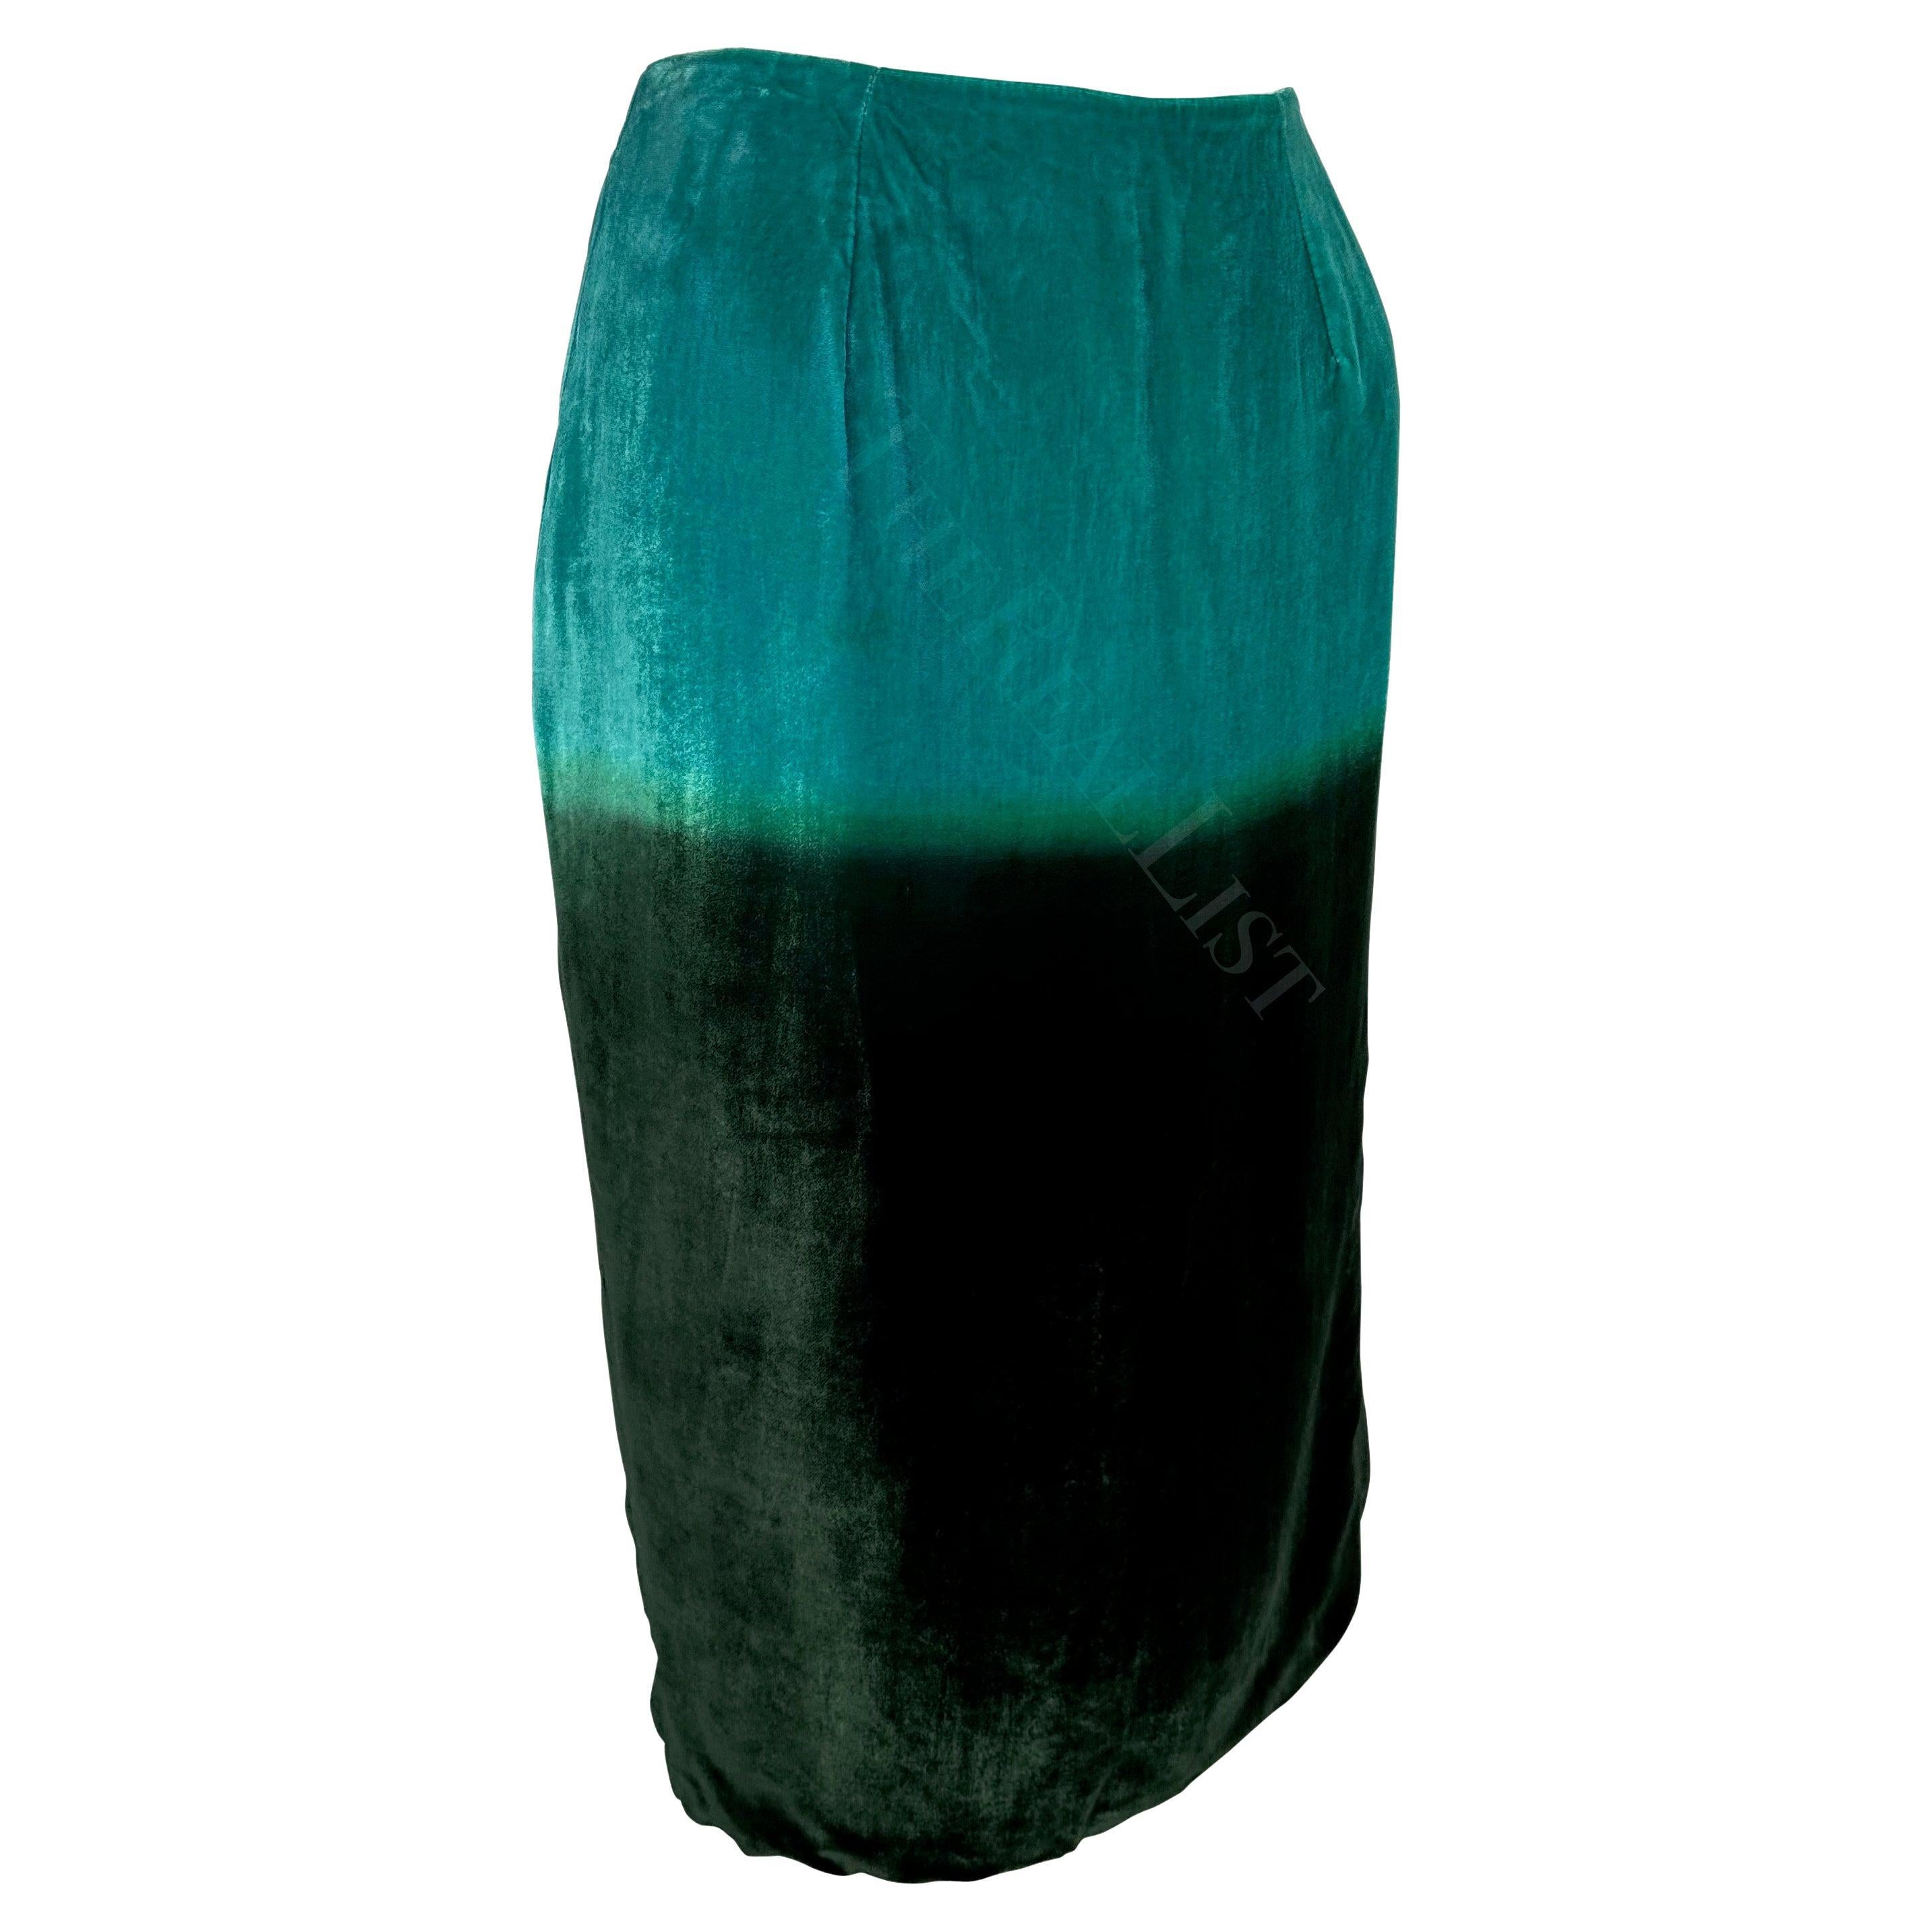 S/S 1997 Gucci by Tom Ford Blue Green Ombré Velvet Runway Skirt For Sale 2